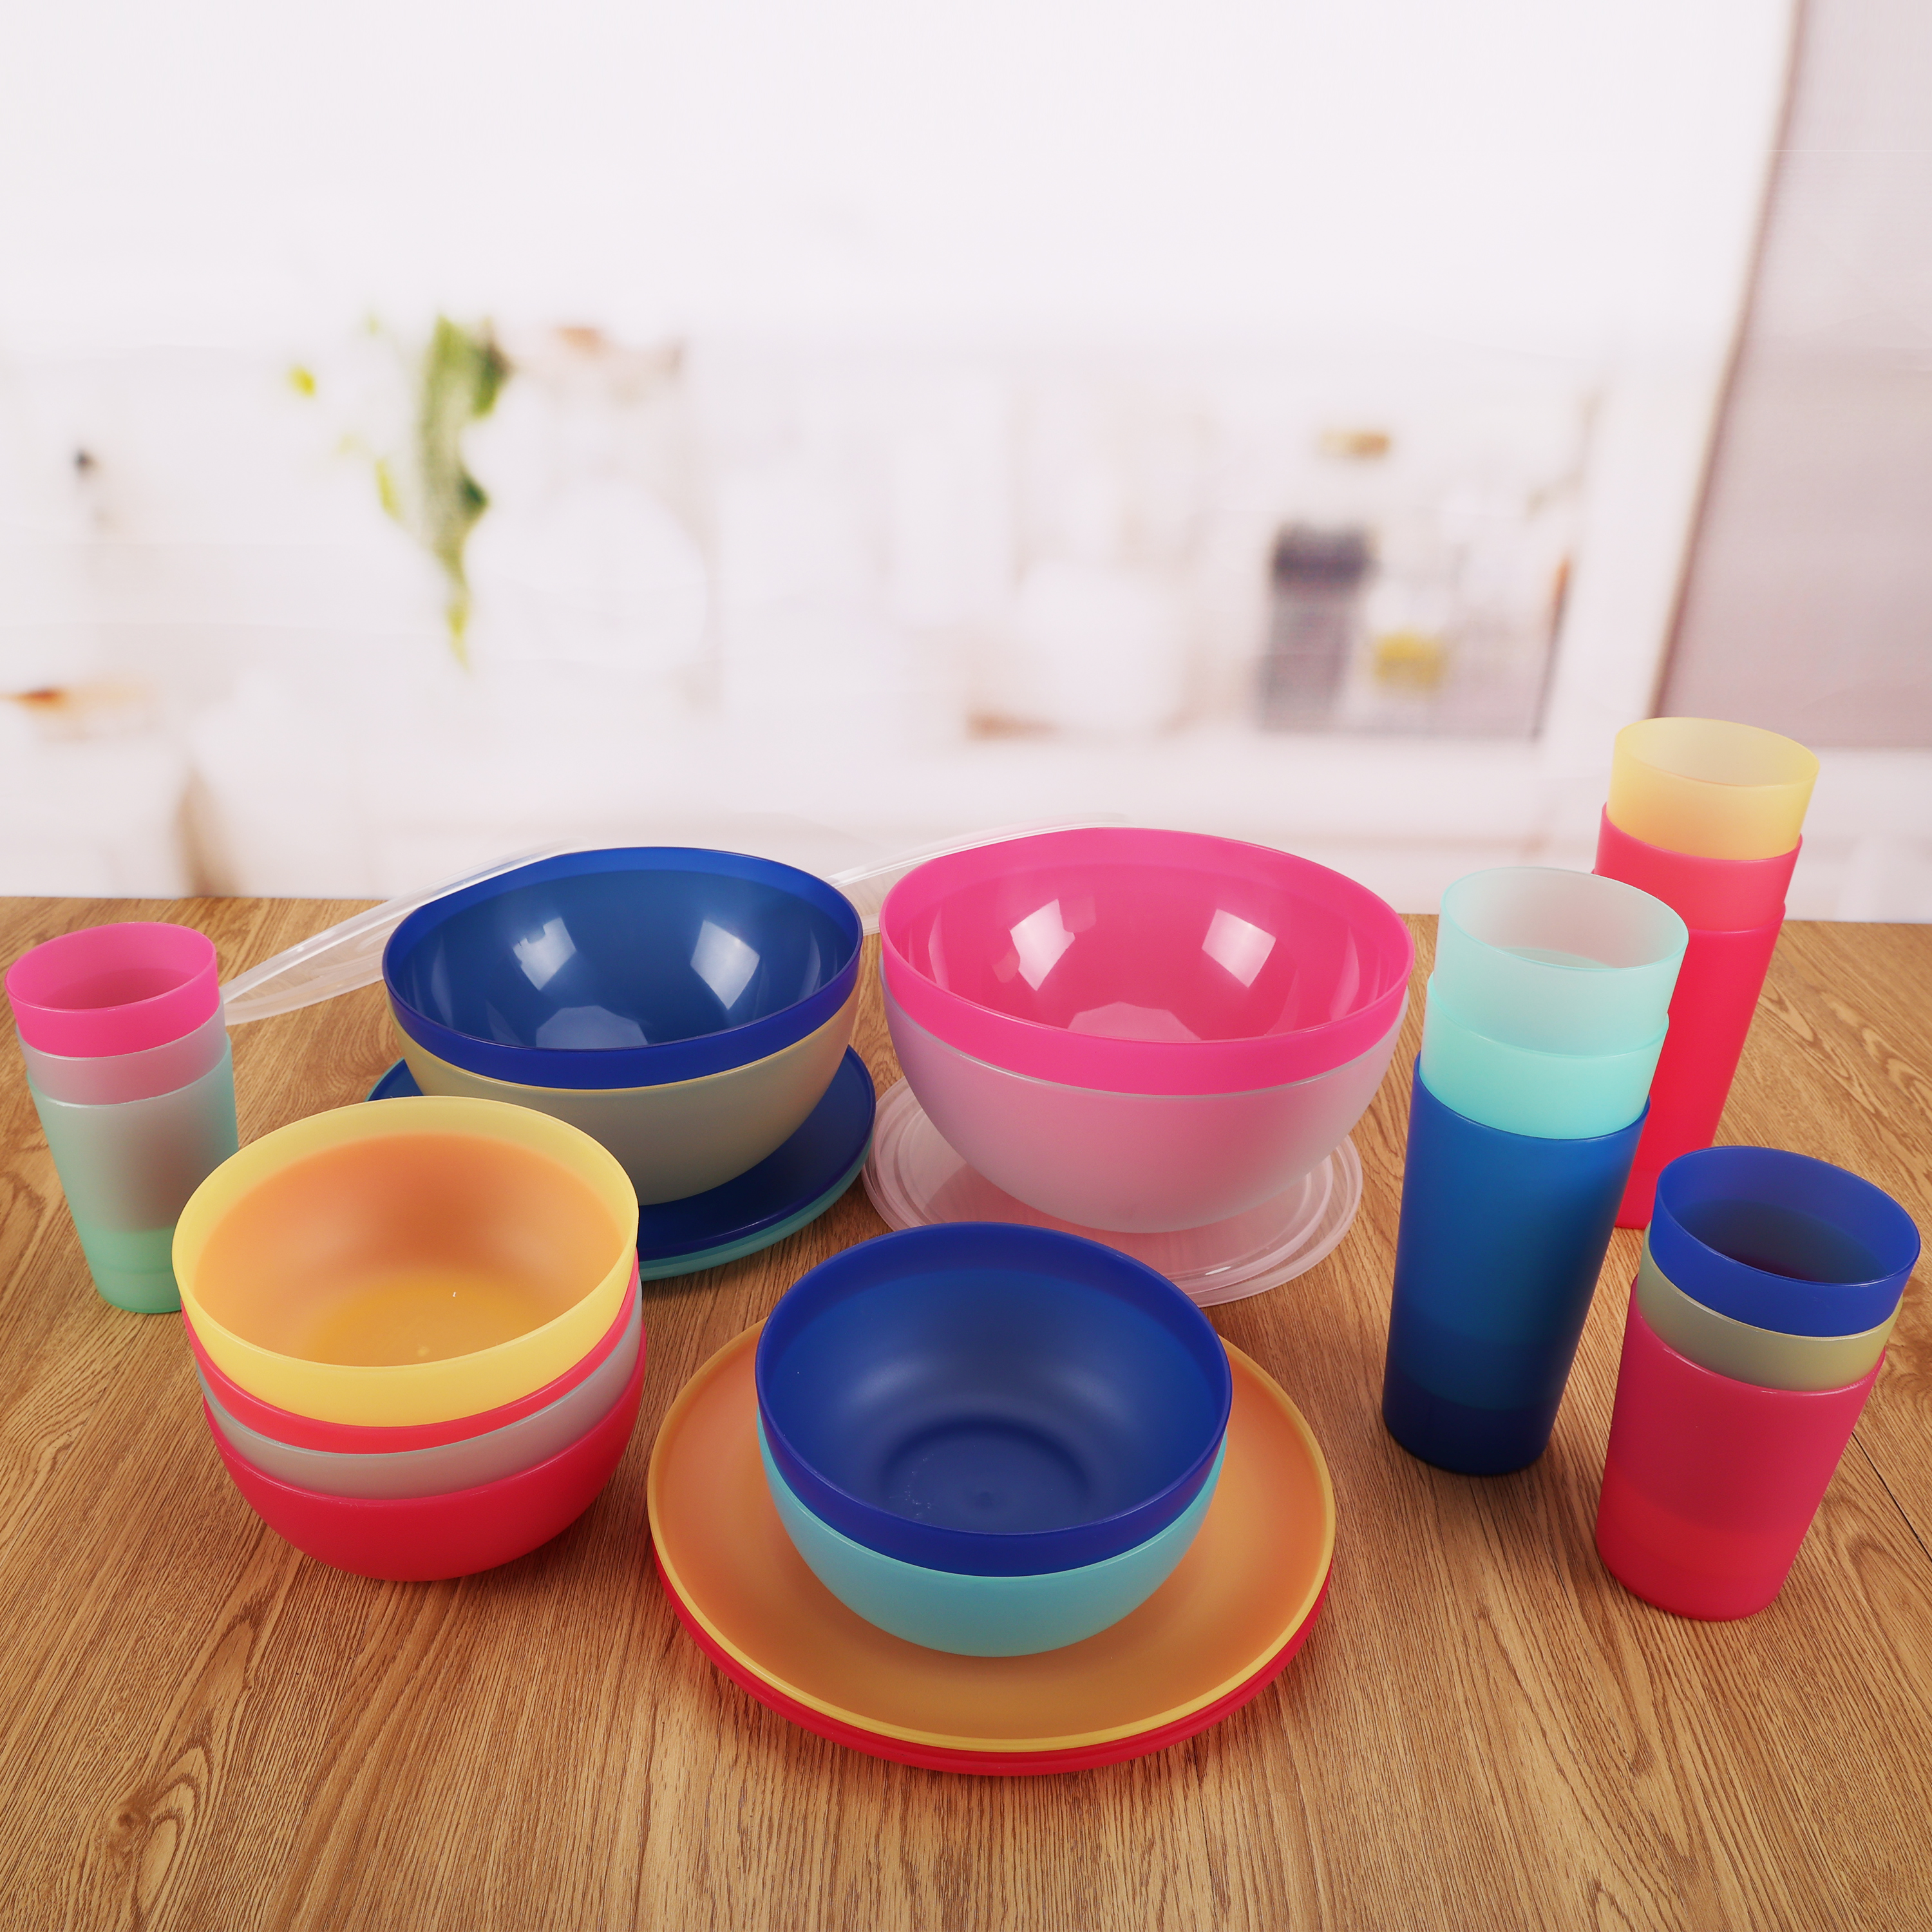 Mainstays 32-Piece Round Plastic Dinnerware Bundle Set, Multicolor - image 2 of 24